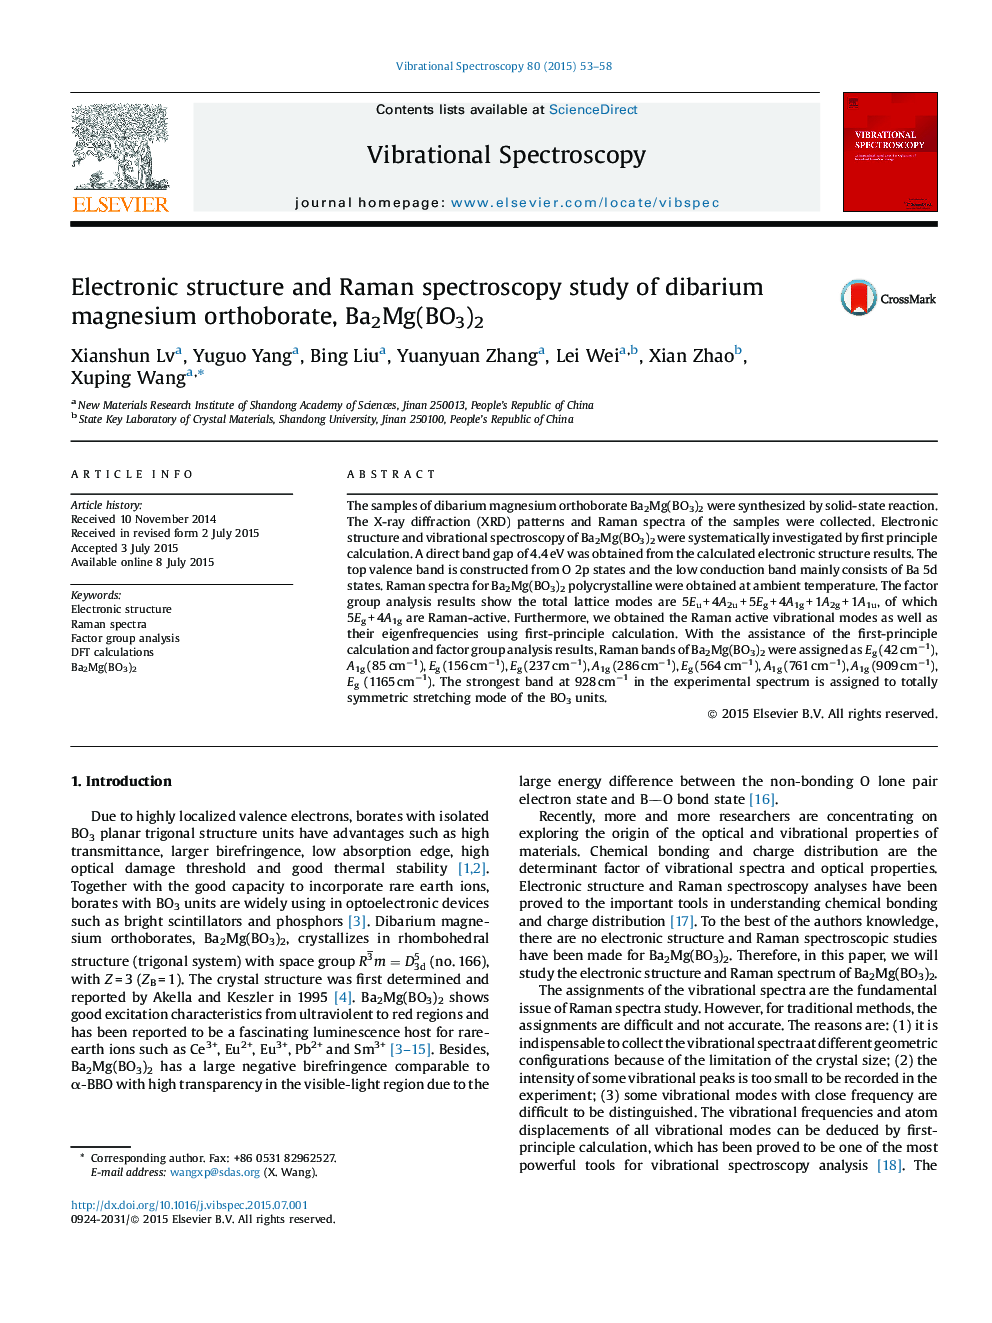 Electronic structure and Raman spectroscopy study of dibarium magnesium orthoborate, Ba2Mg(BO3)2